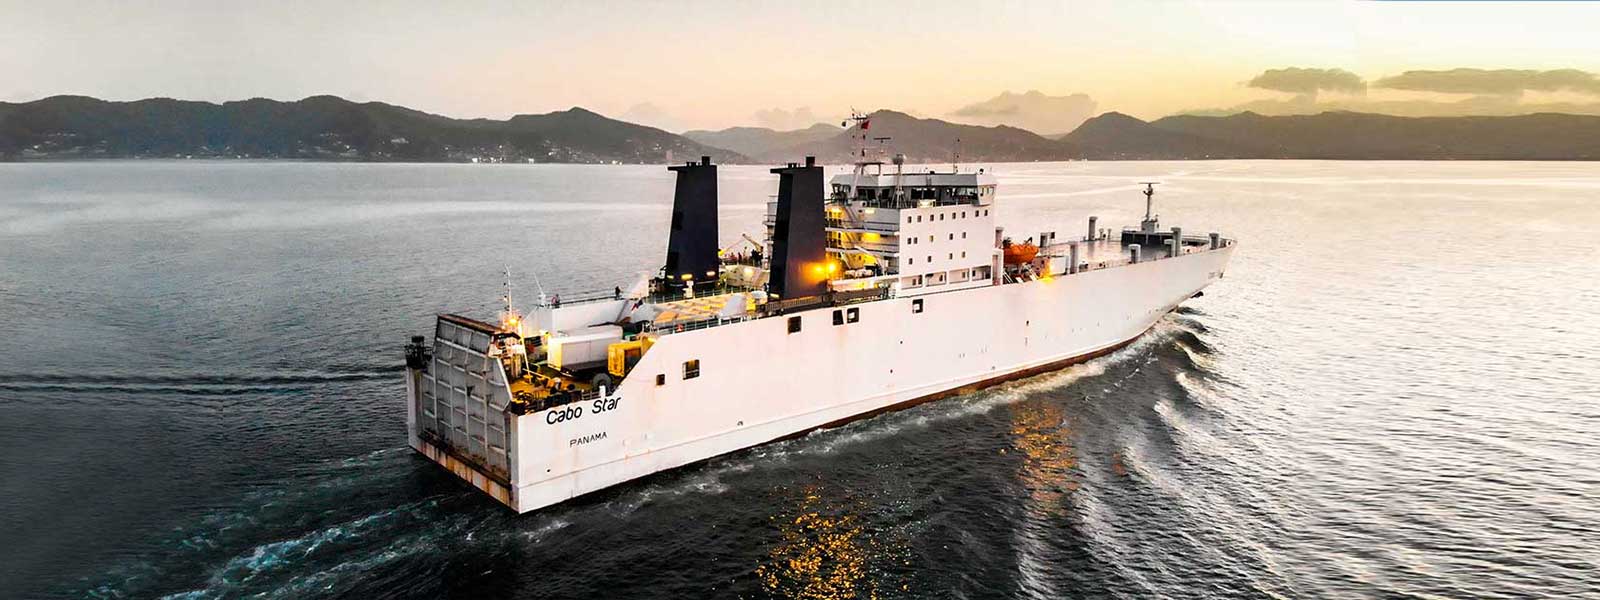 MV Cabo Star  begins seabridge service